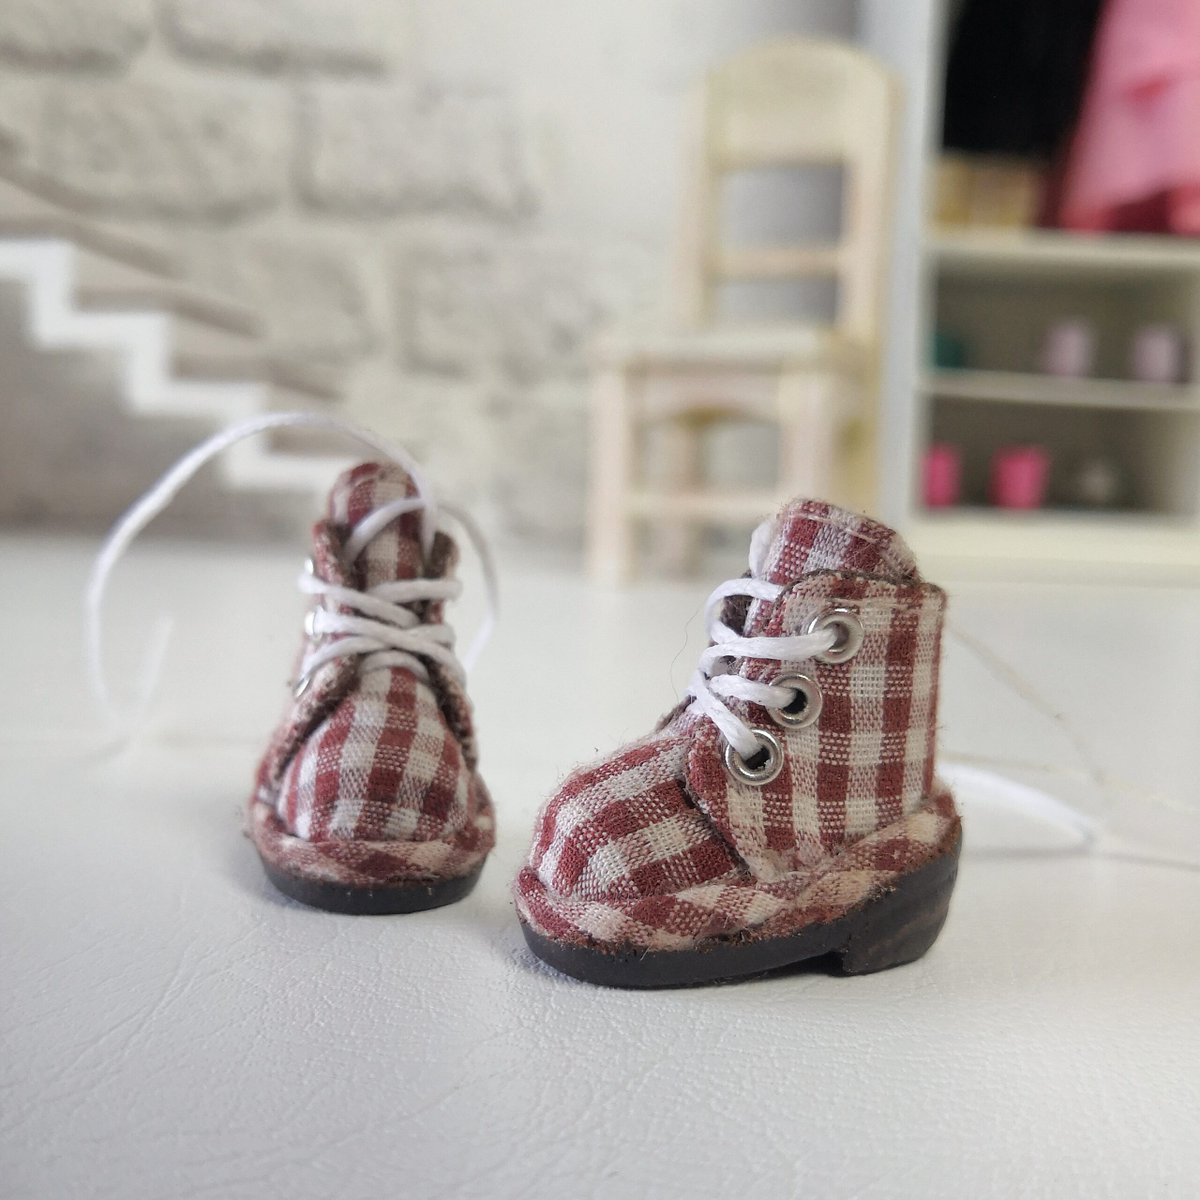 Shoes for Blythe doll dailydoll.shop/shop/shoes-for… #dailydollshop #blythe #dailydoll #blythedoll #homedecor #blytheclothes #blythelove #toys #dolls #valentinesgift #artdoll #ooak #christmasgifts #customblythe #handmade #birthdaygift #originalblythe #dollaccessories #clothesdoll